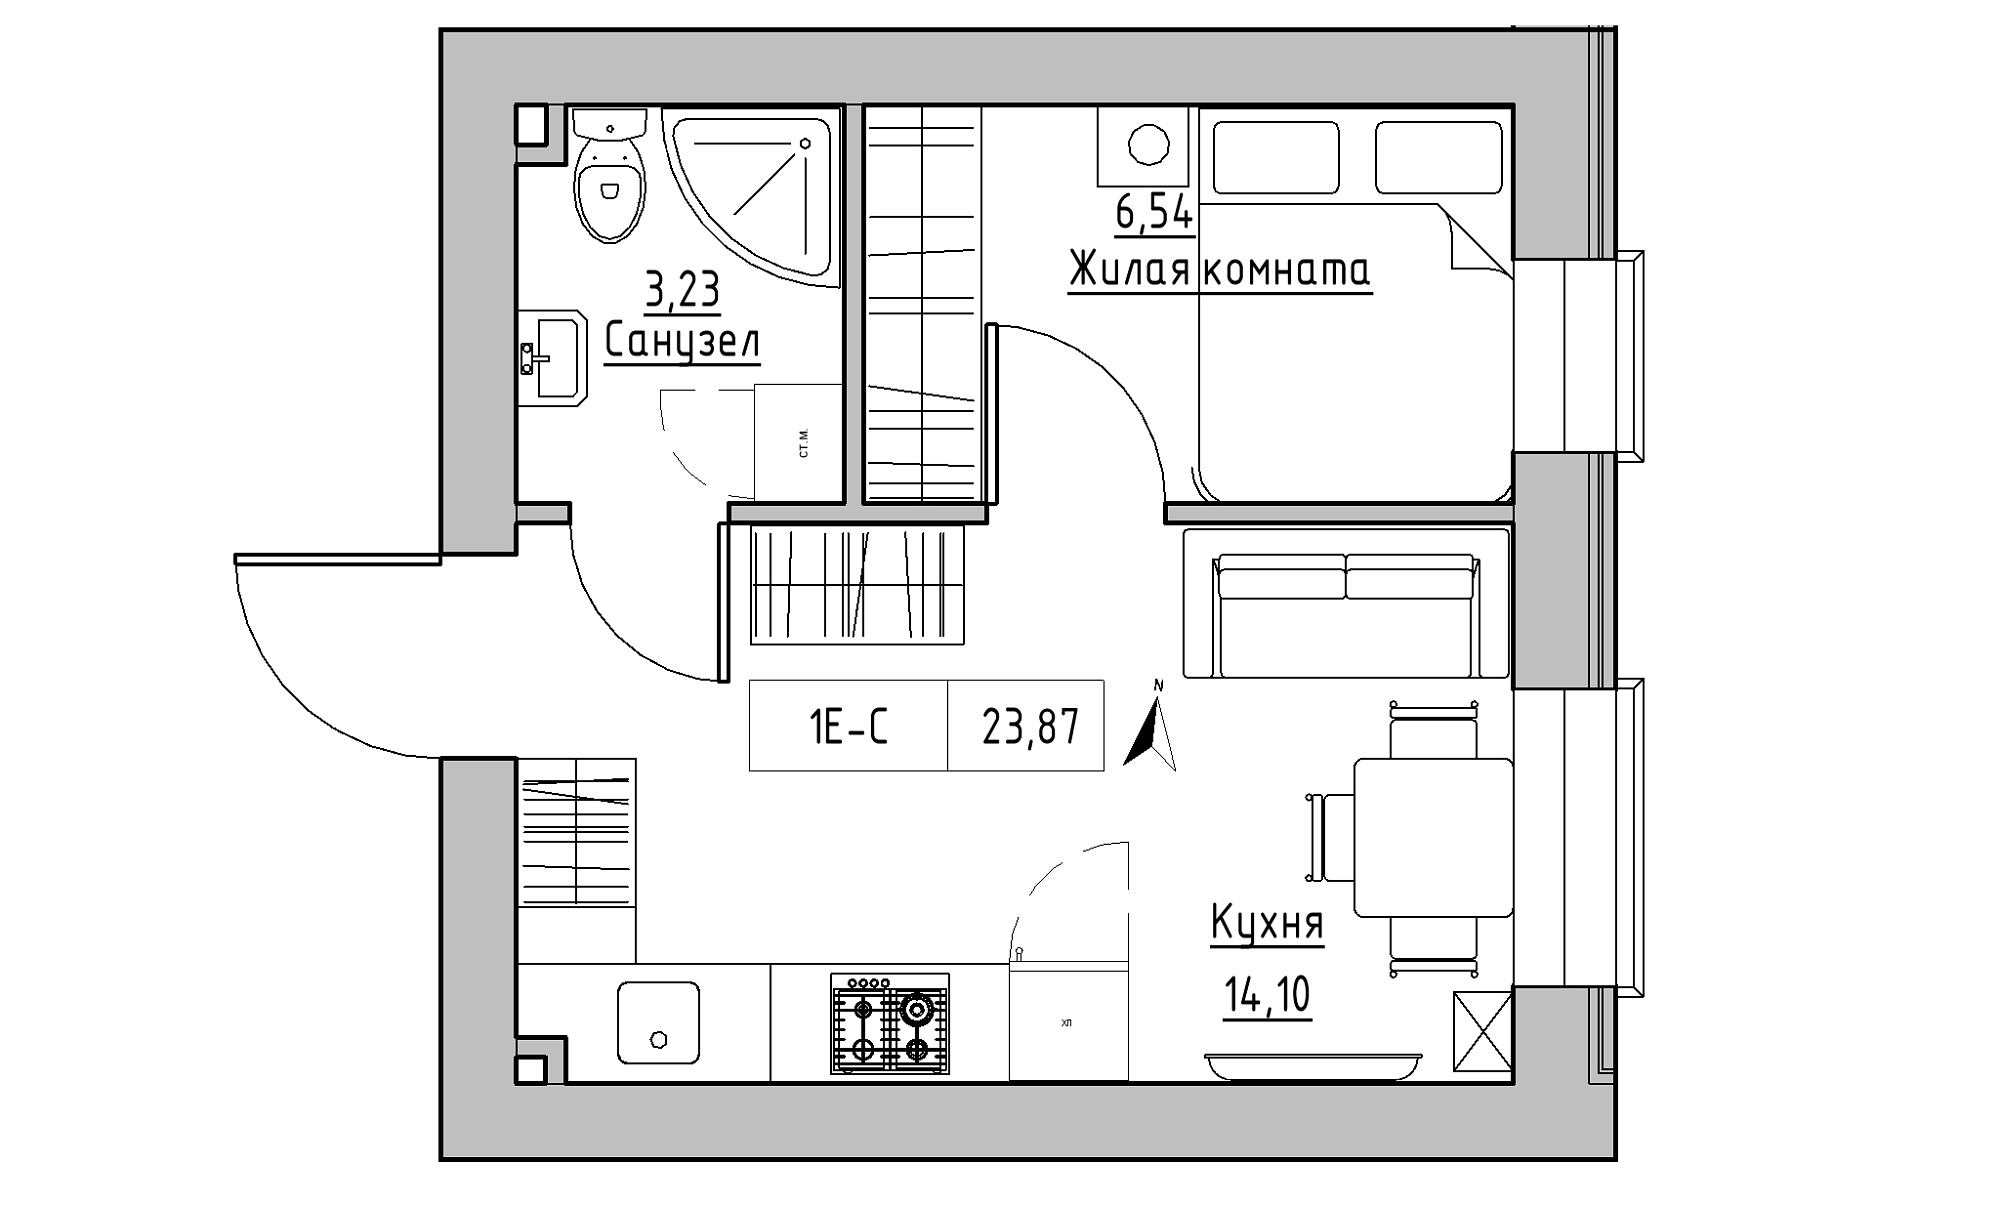 Planning 1-rm flats area 23.87m2, KS-023-01/0004.